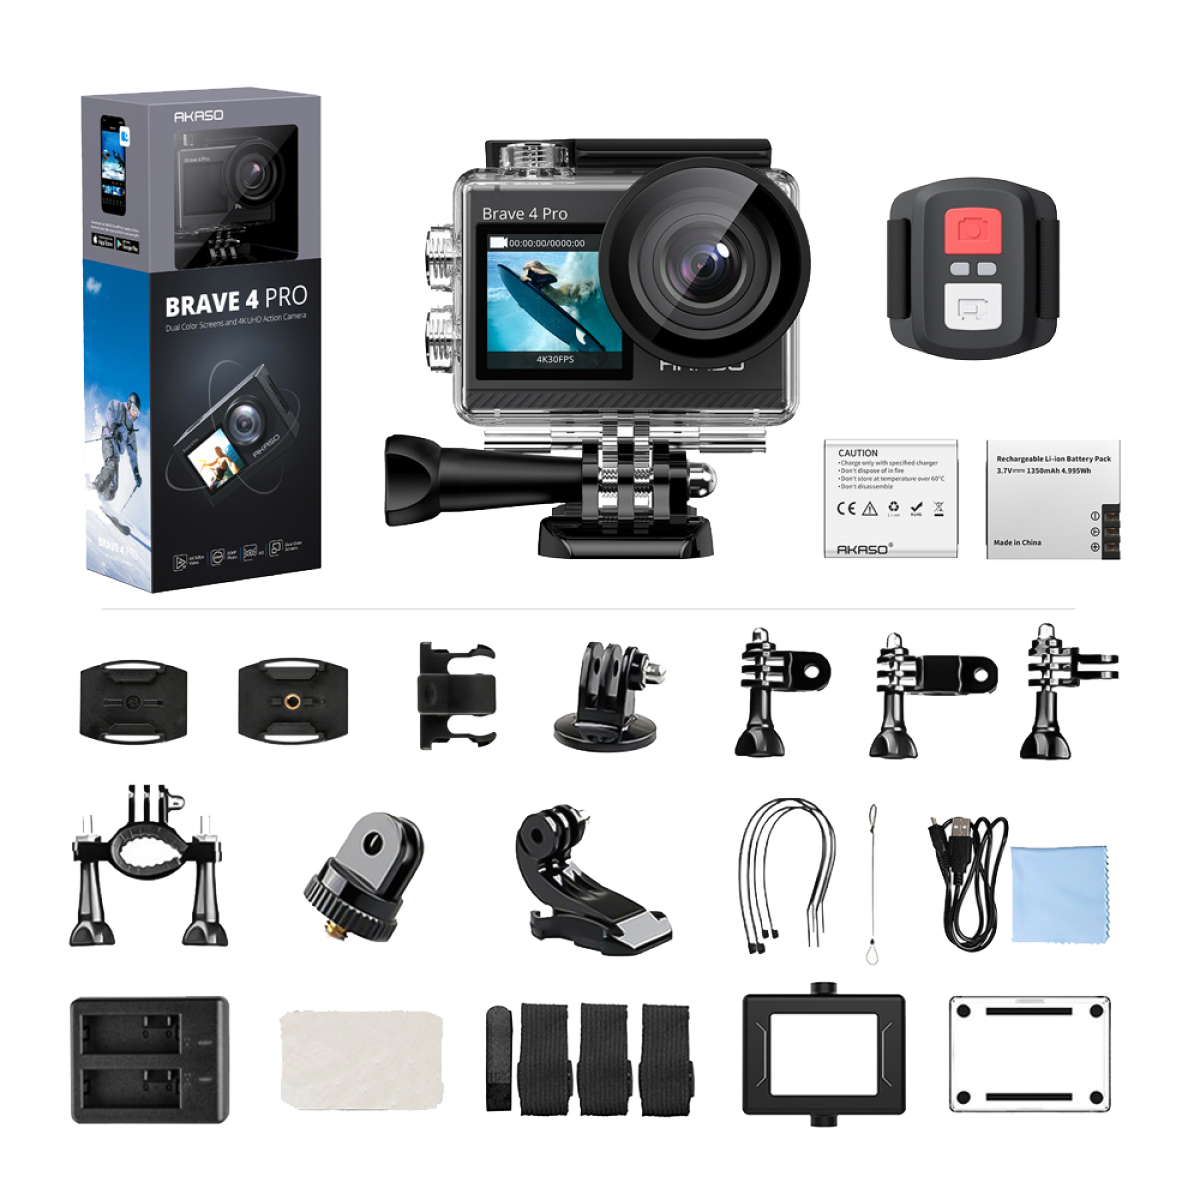 Câmera Esportiva Akaso BRAVE 4PRO, 4K / 30FPS, À prova d'água, Touch Screen, Dual Screen, IPS, Black